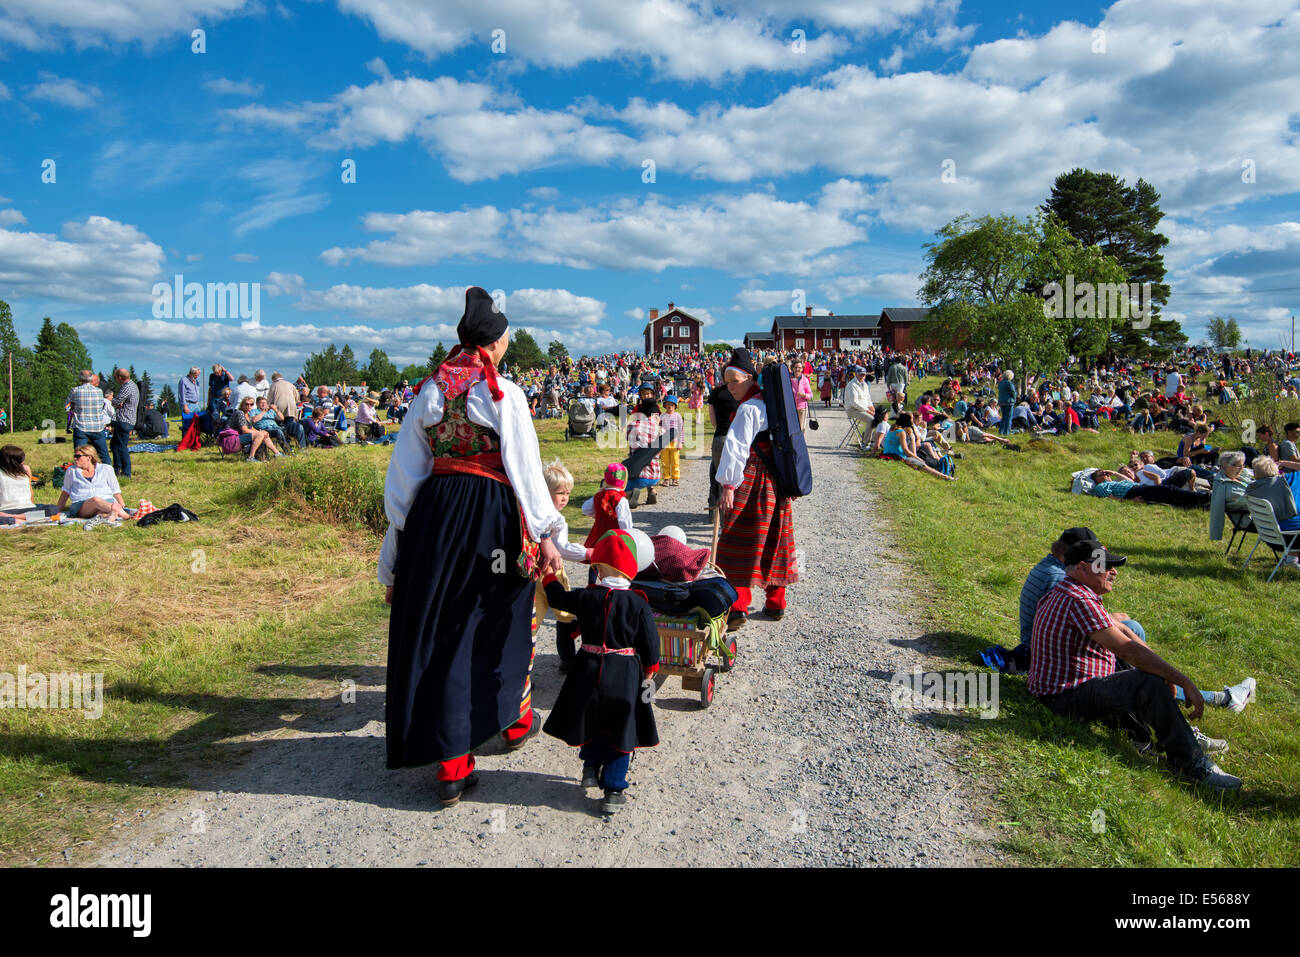 The famous traditional folk music festival in Bingsjo, Sweden. Stock Photo